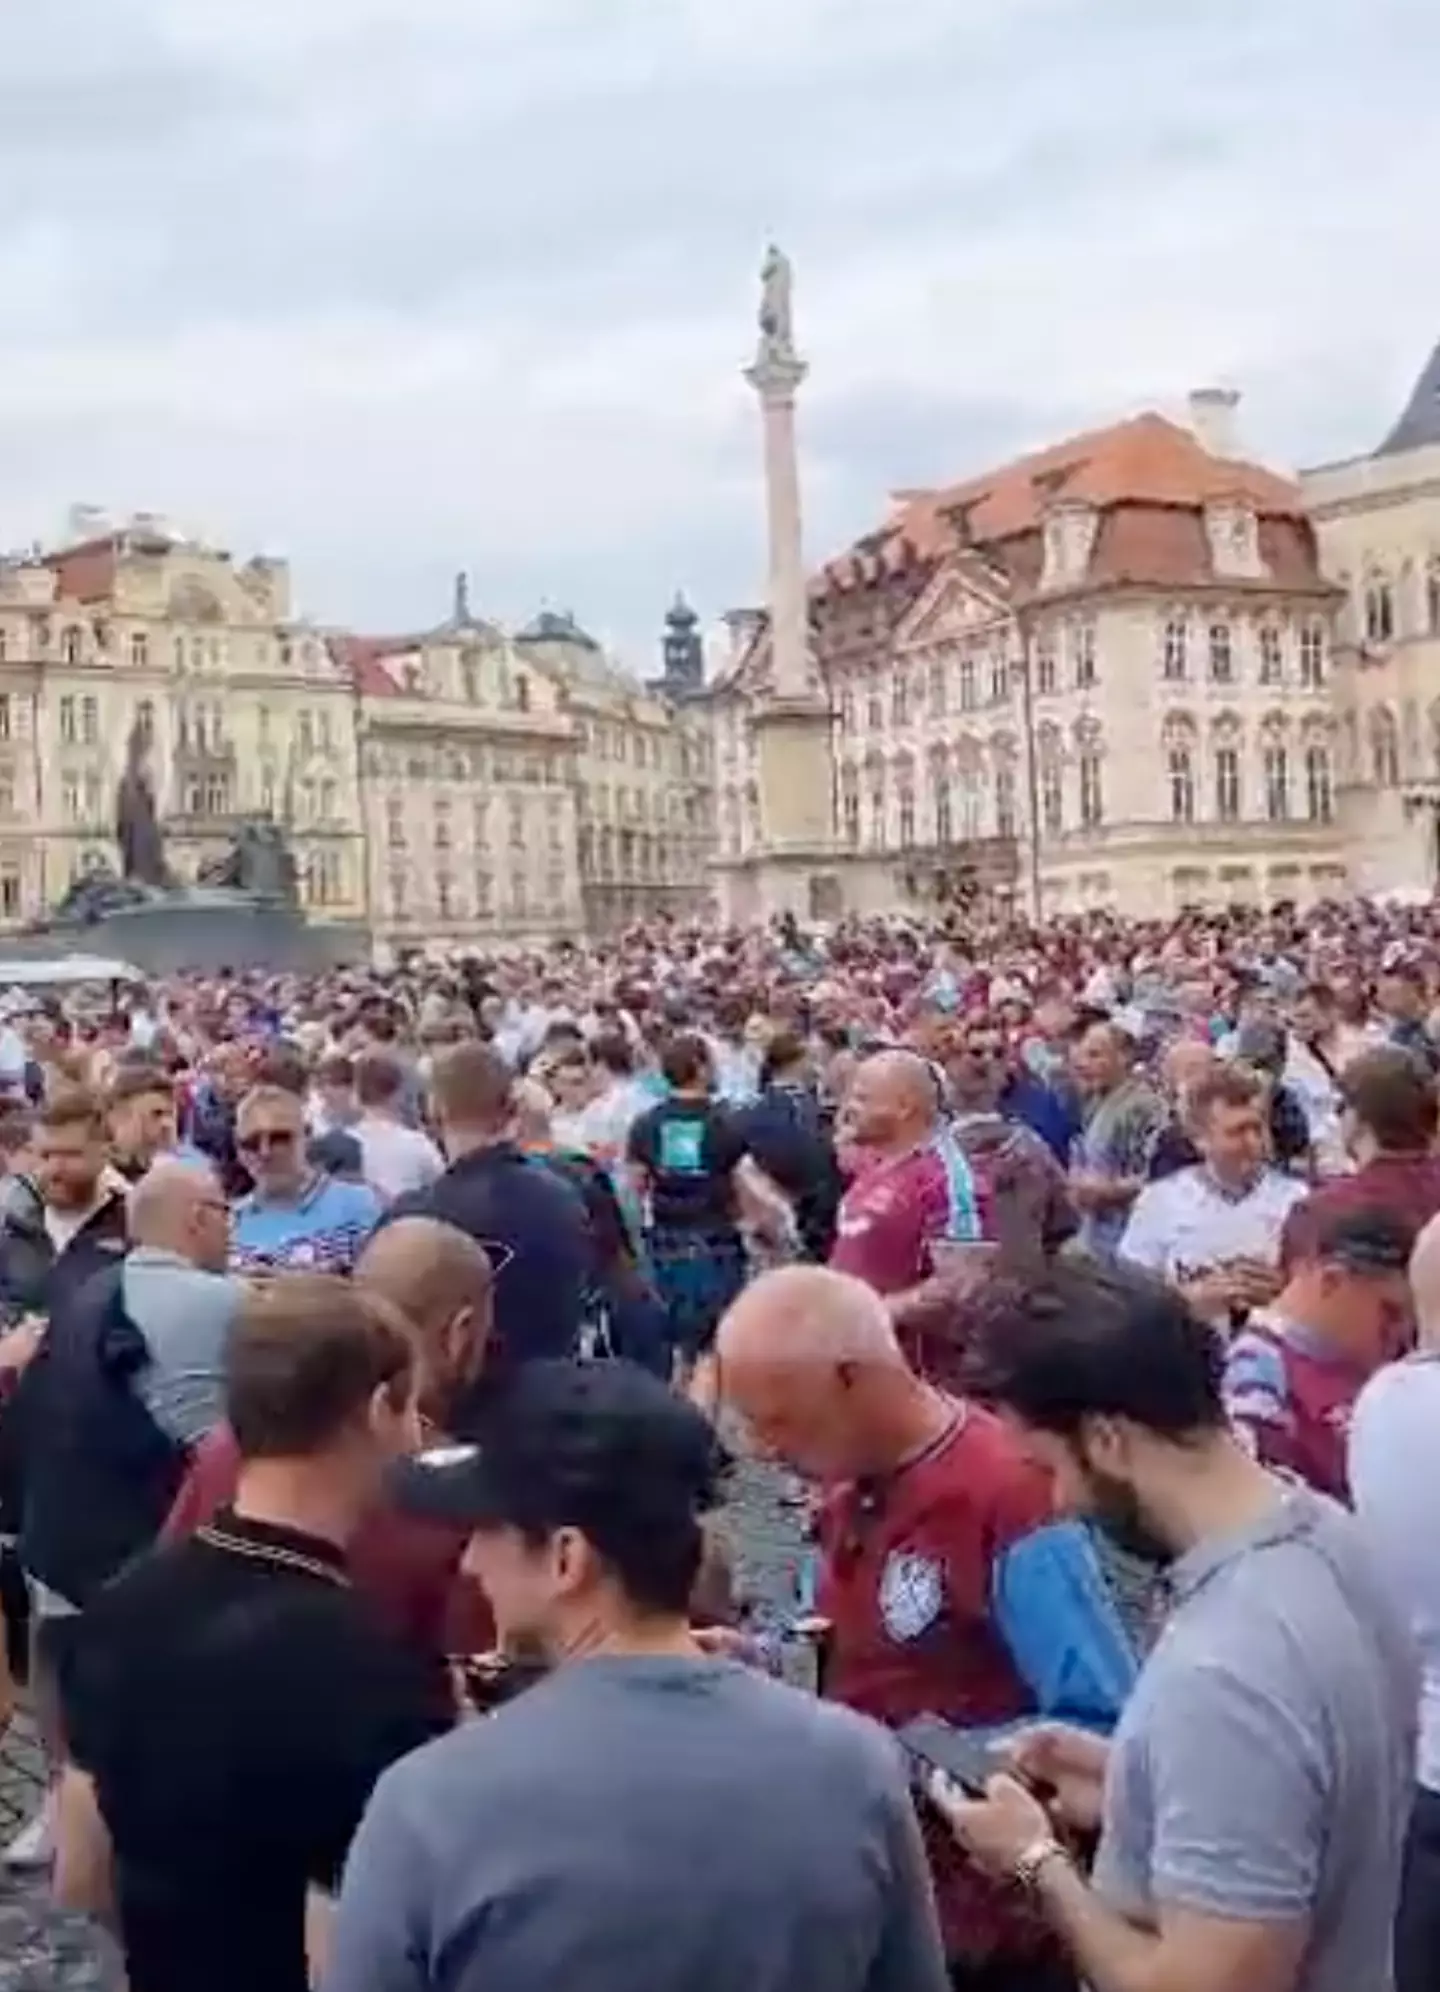 West Ham fans gathering in central Prague earlier today.